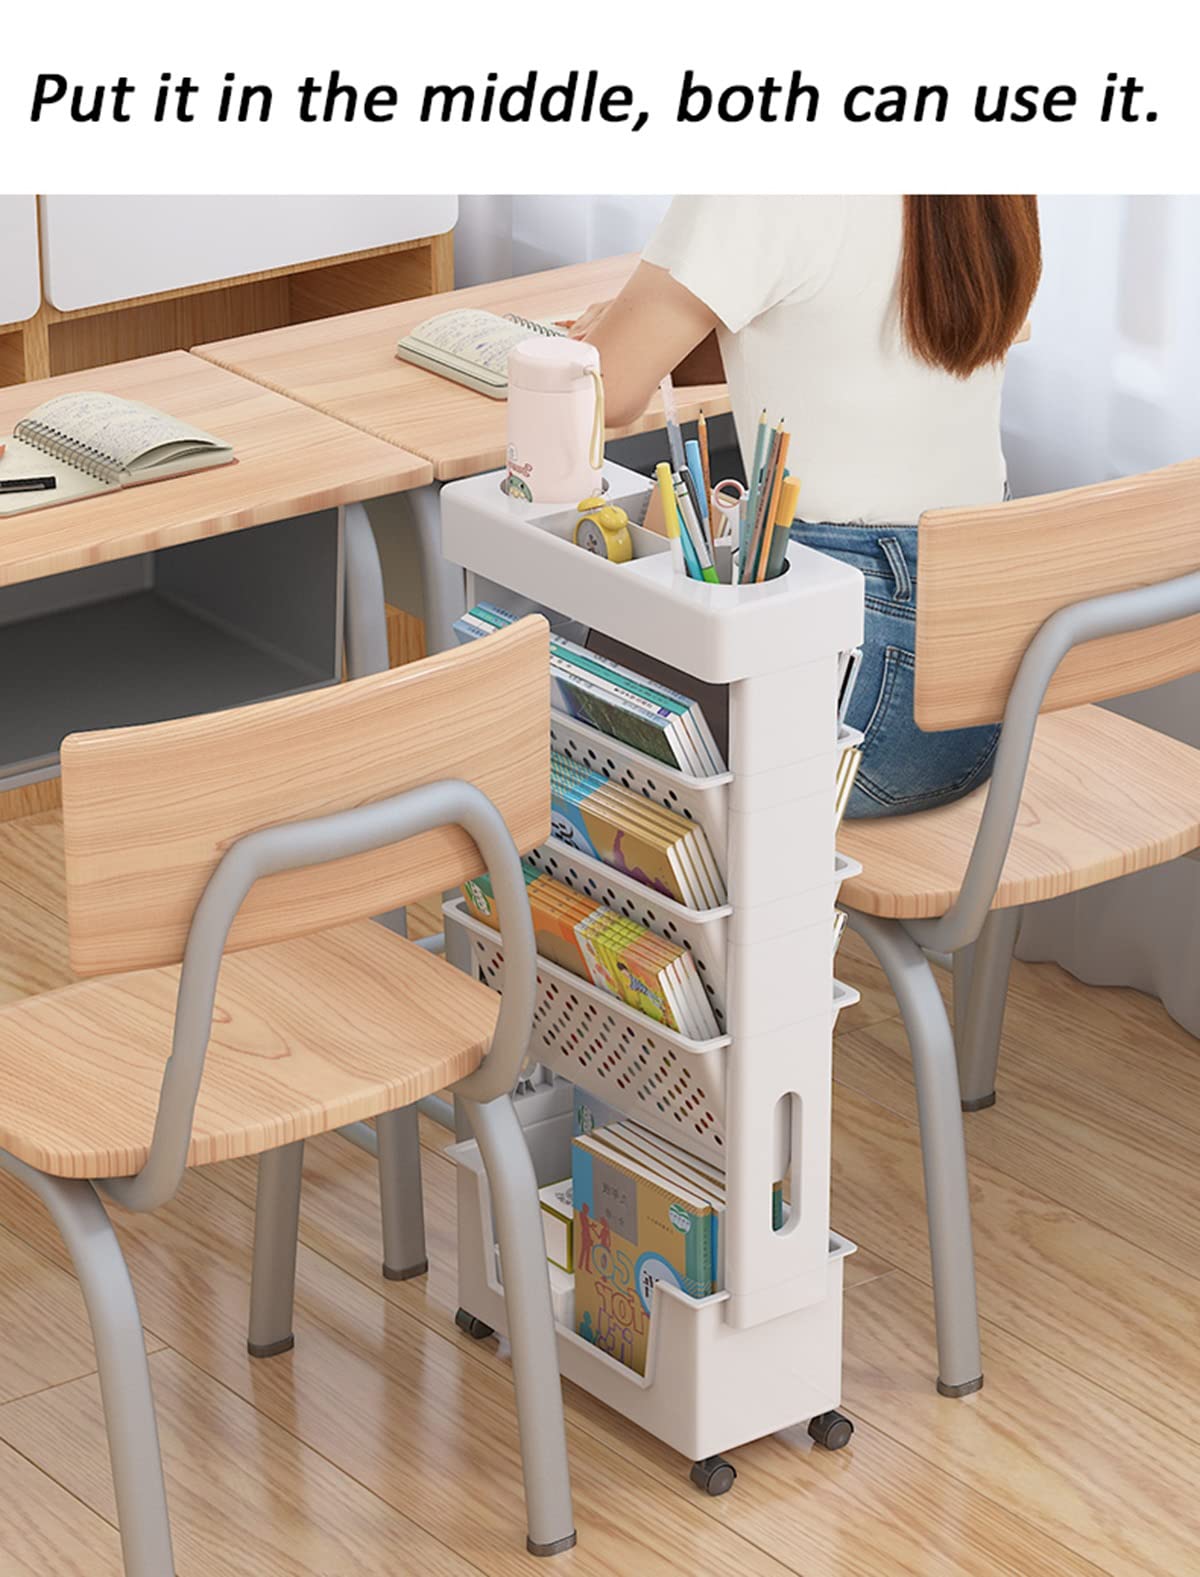 Movable Classroom Deskside Bookshelf, Compact Desk Storage Organizer with Caster Wheels, Slim Storage Trolley for Books, Corner Display Rack for Dorm Library, Multi-purpose Rolling Cart, 5-Tier